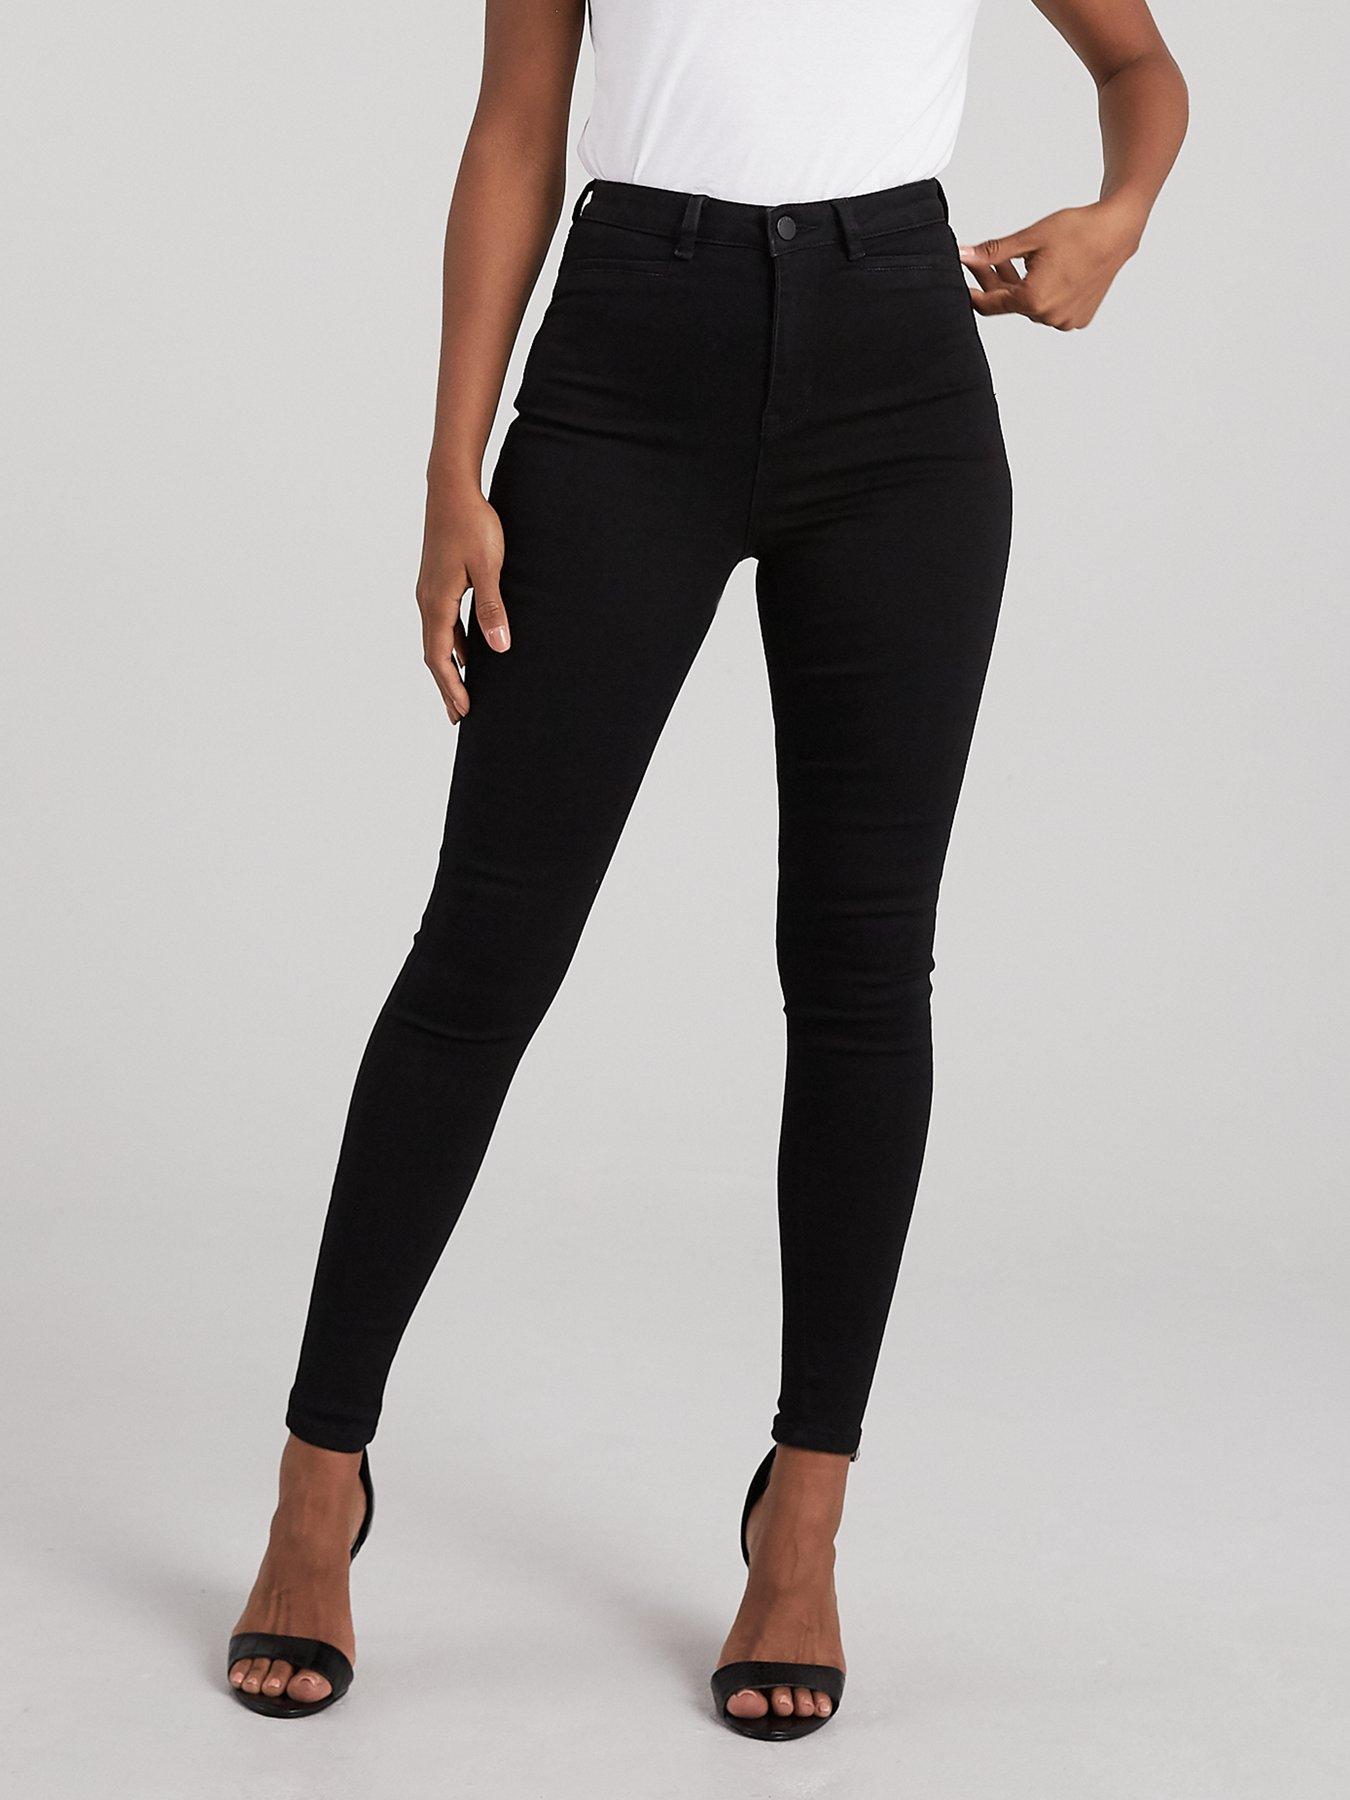 womens black skinny high waisted jeans